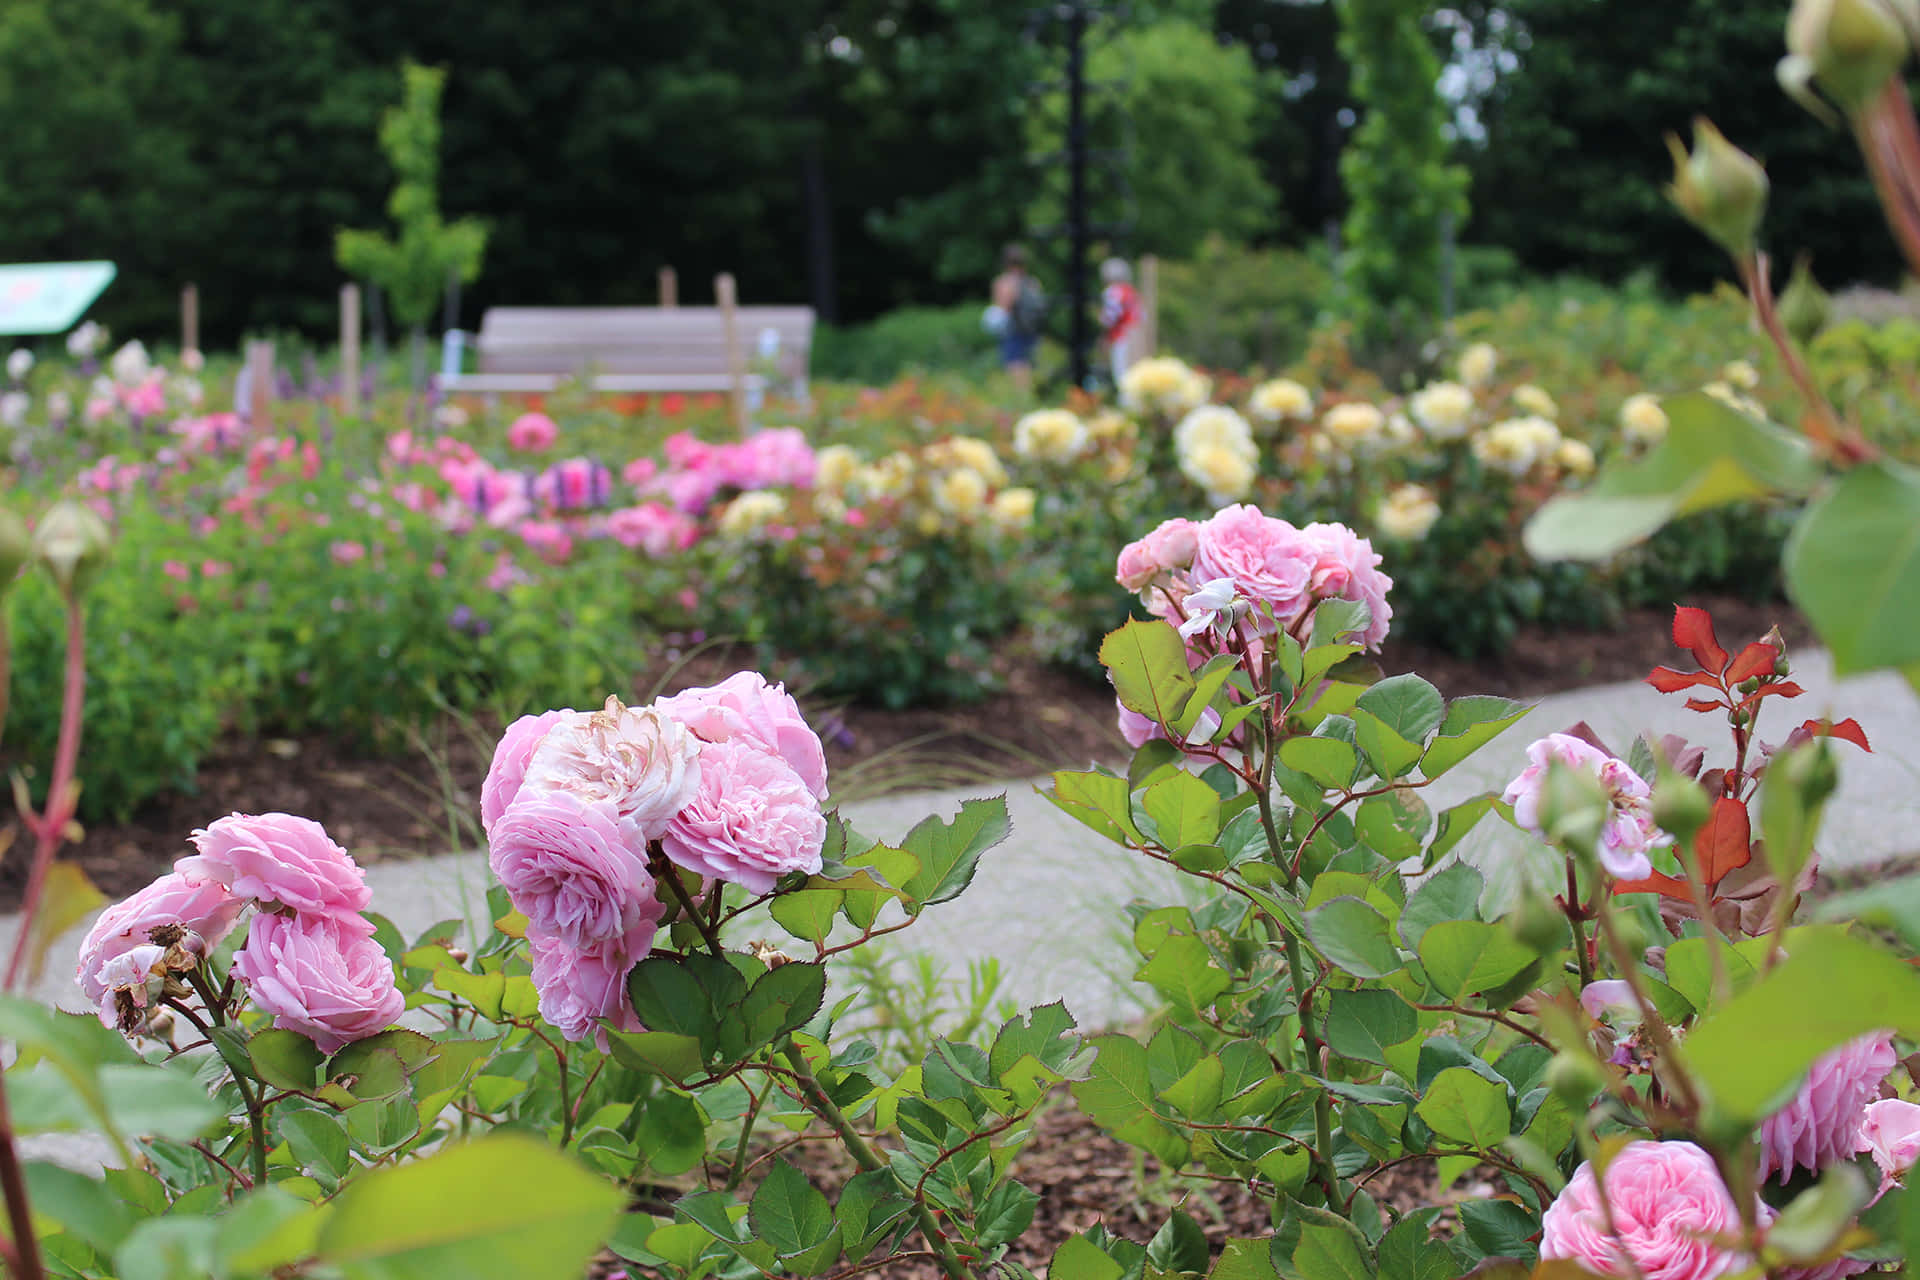 A rose garden in full bloom